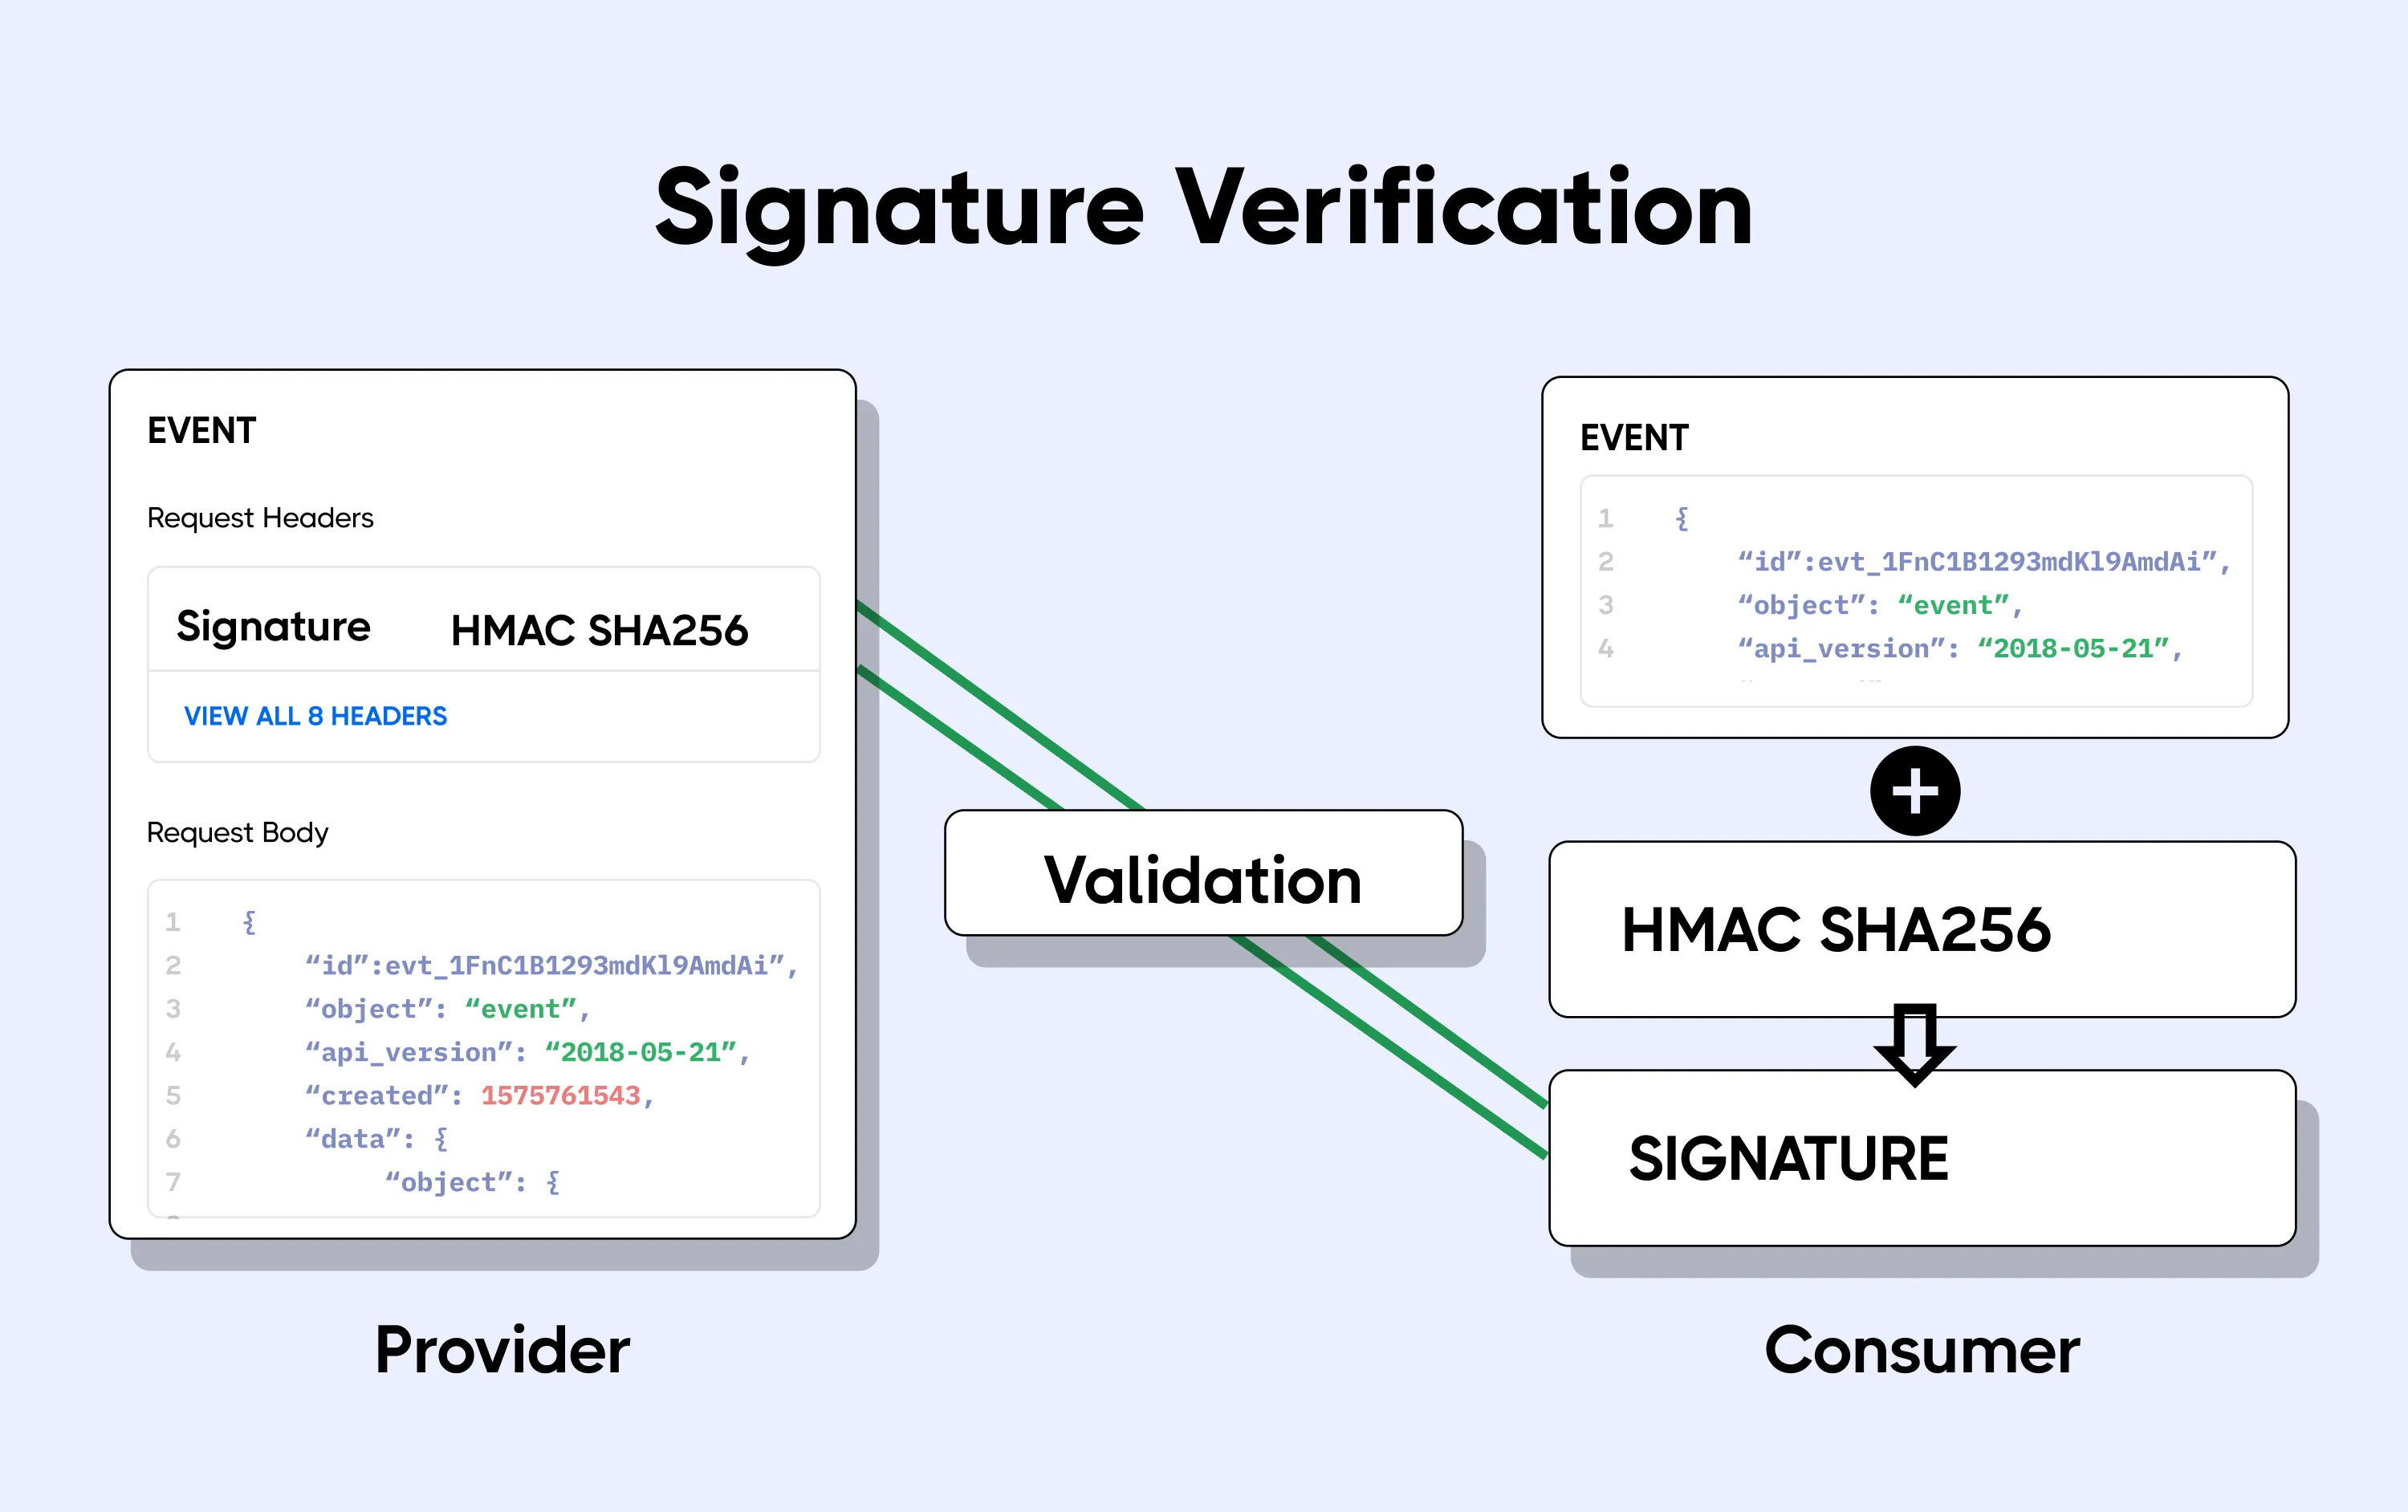 How signature verification works